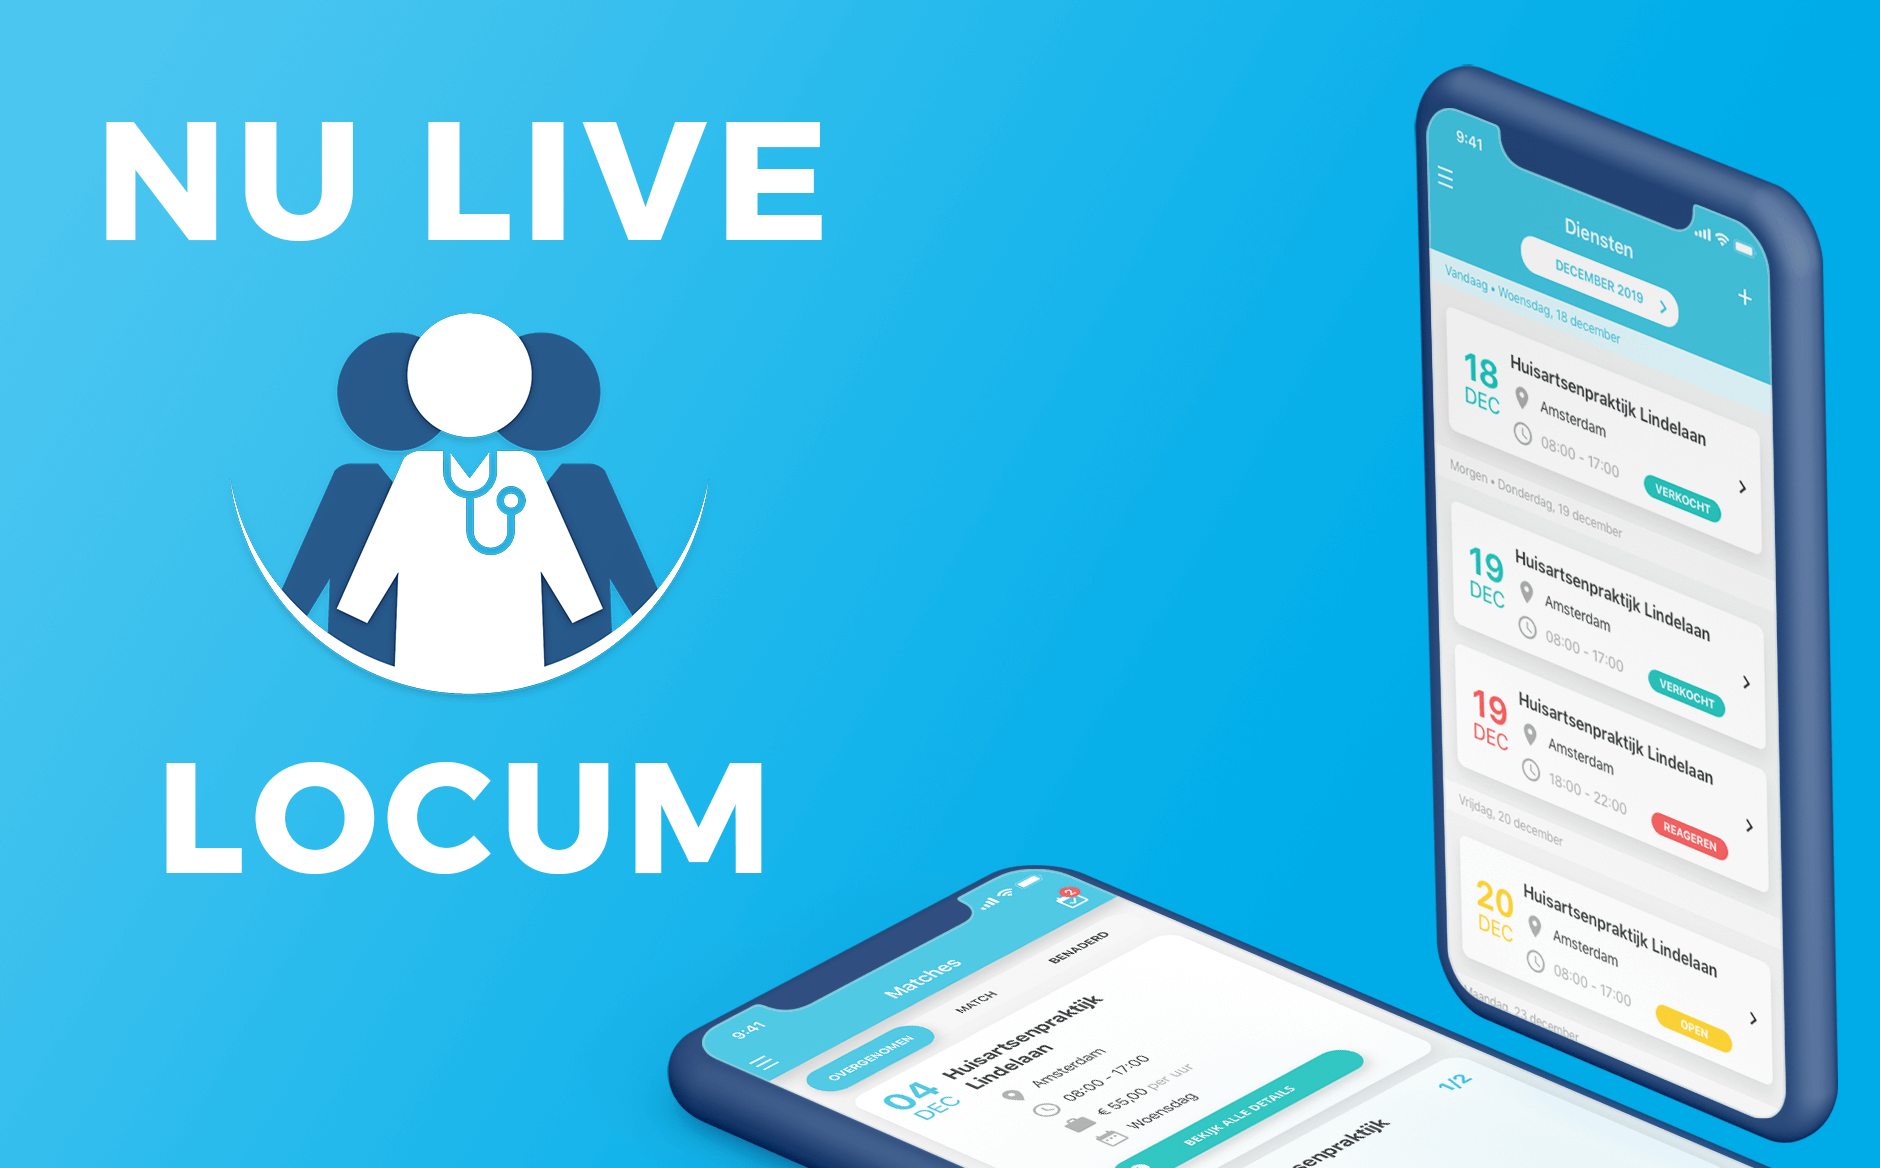 Now live: the Locum app